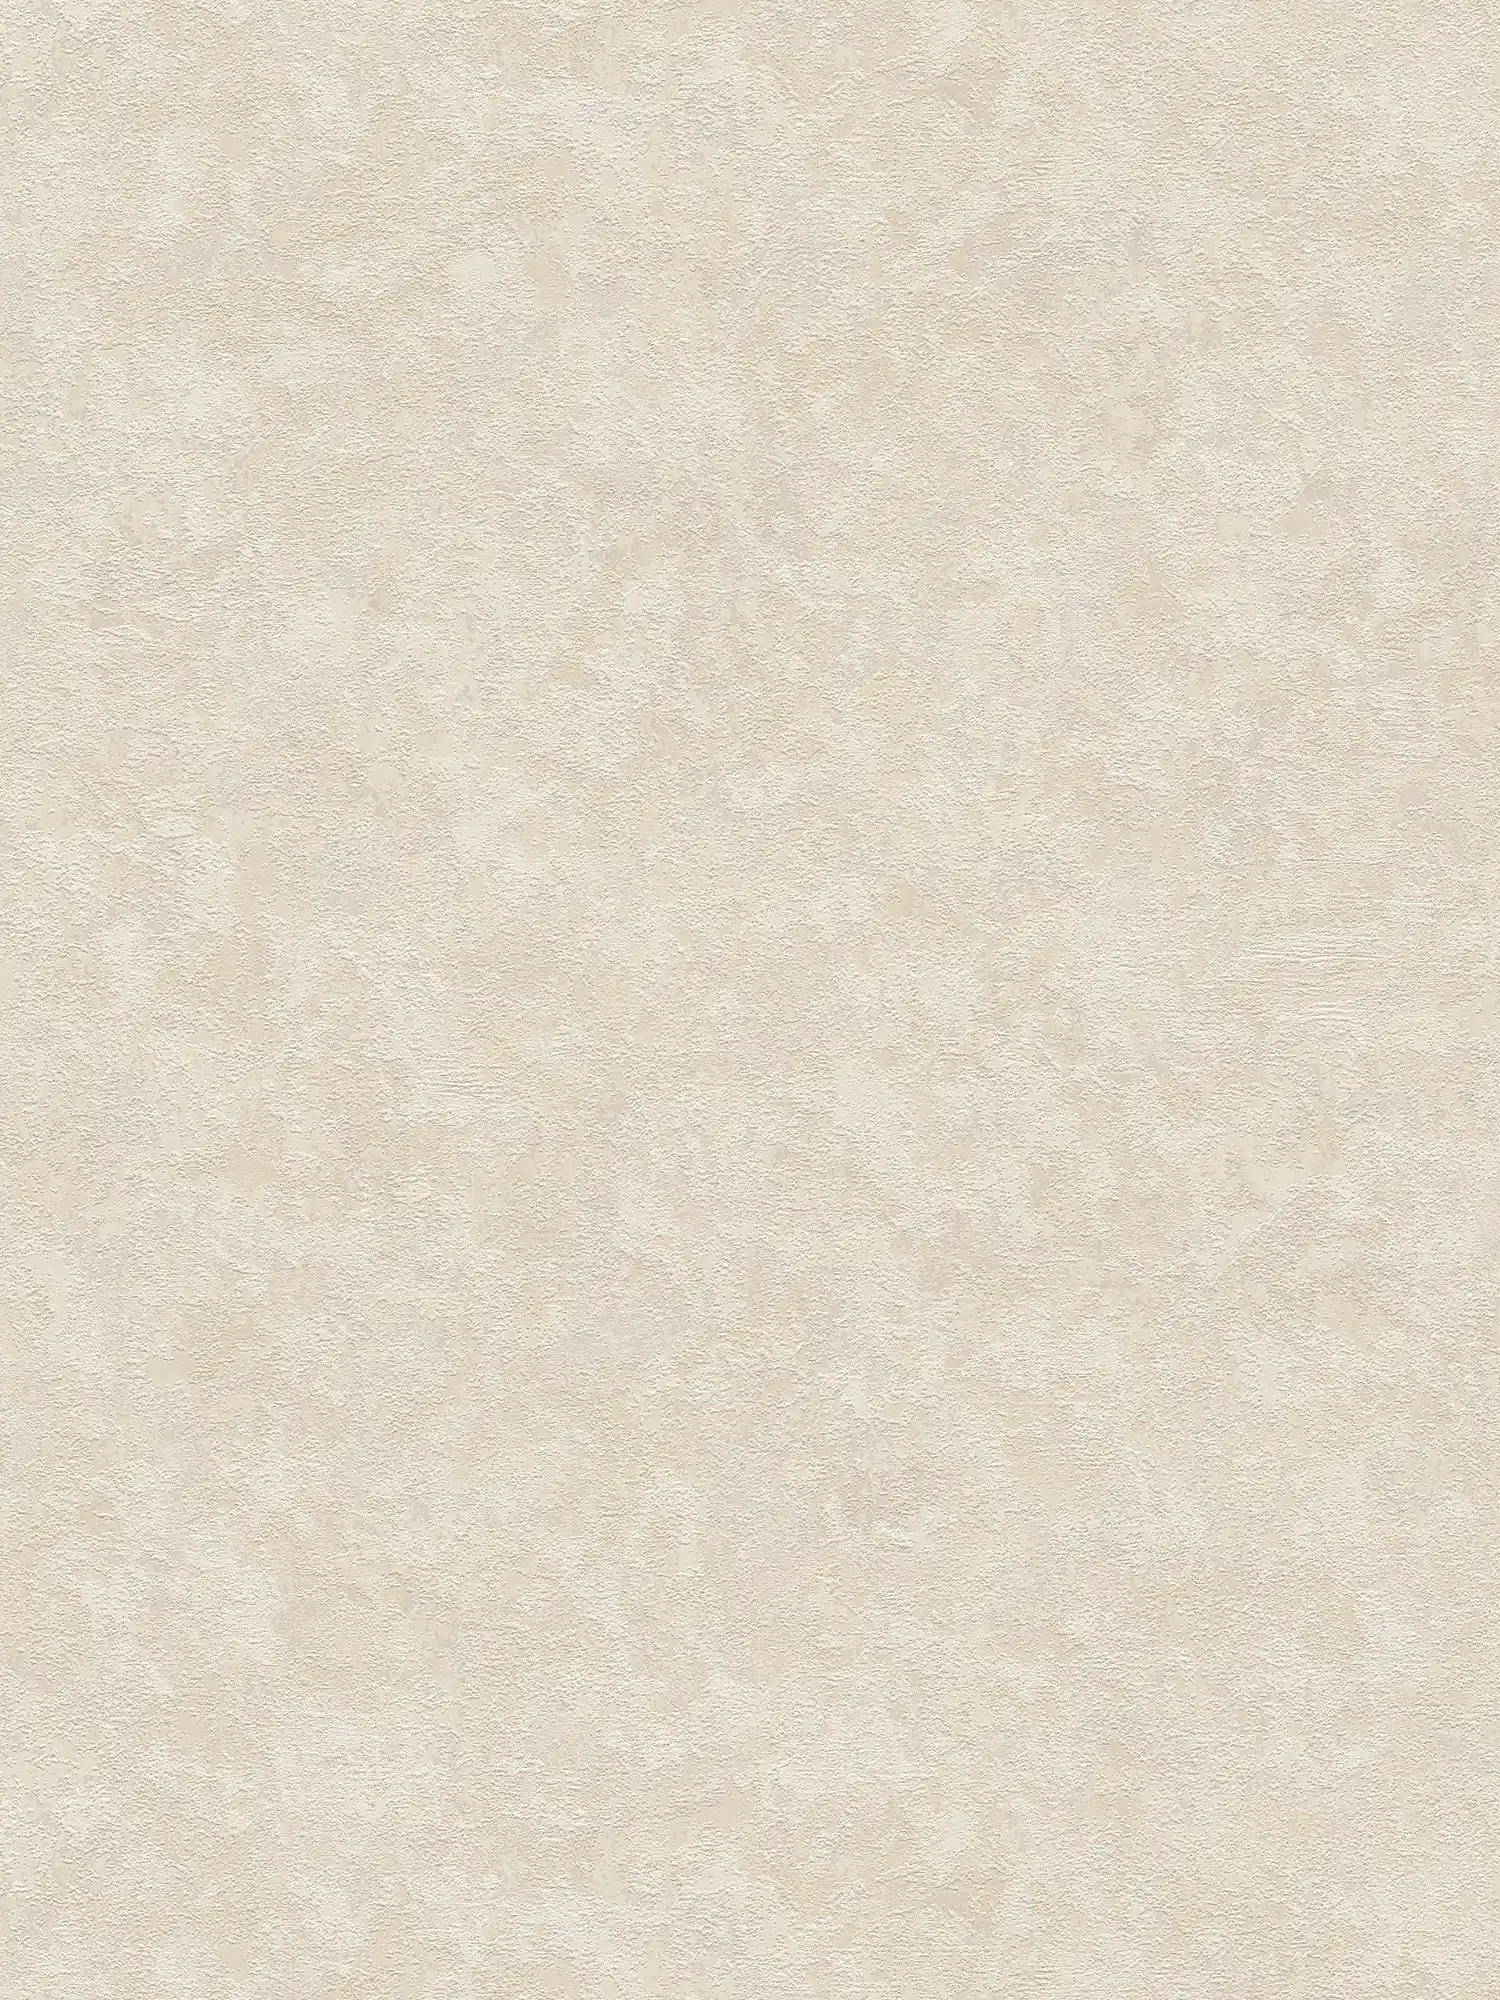 papel pintado texturizado liso moteado - beige, marrón
